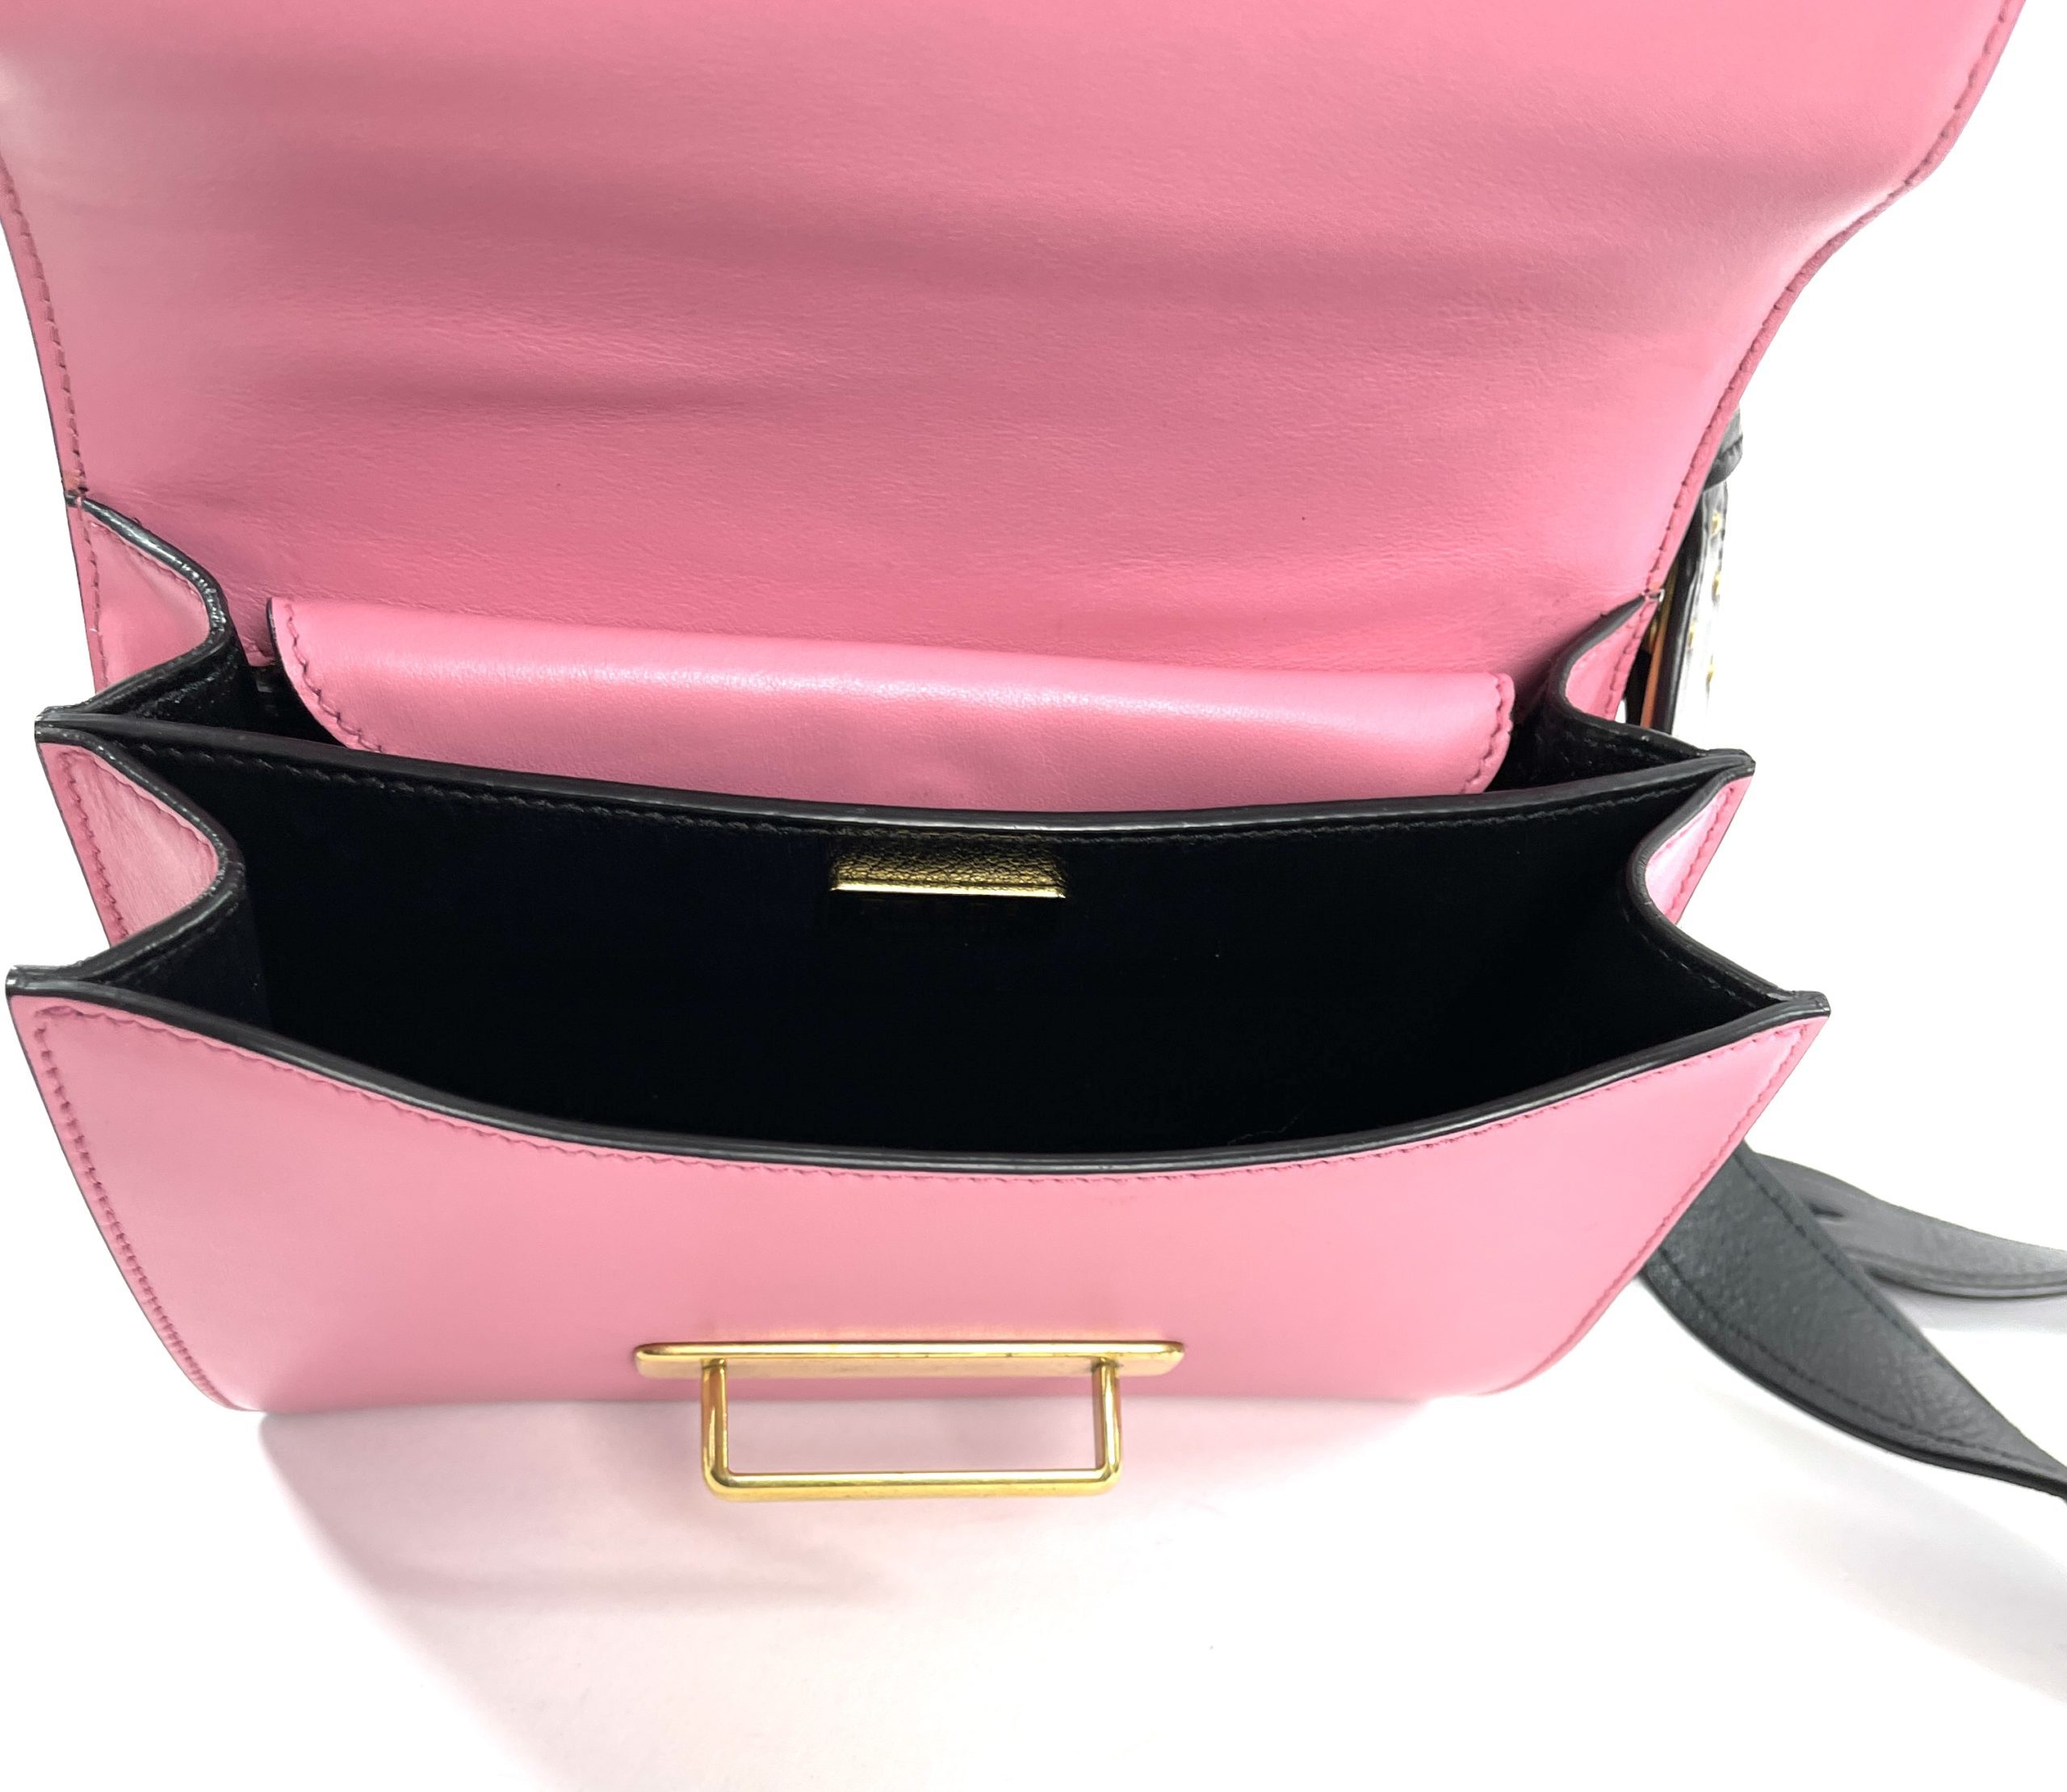 Prada Pink/Black Leather City Calf and Saffiano Leather Cahier Bag